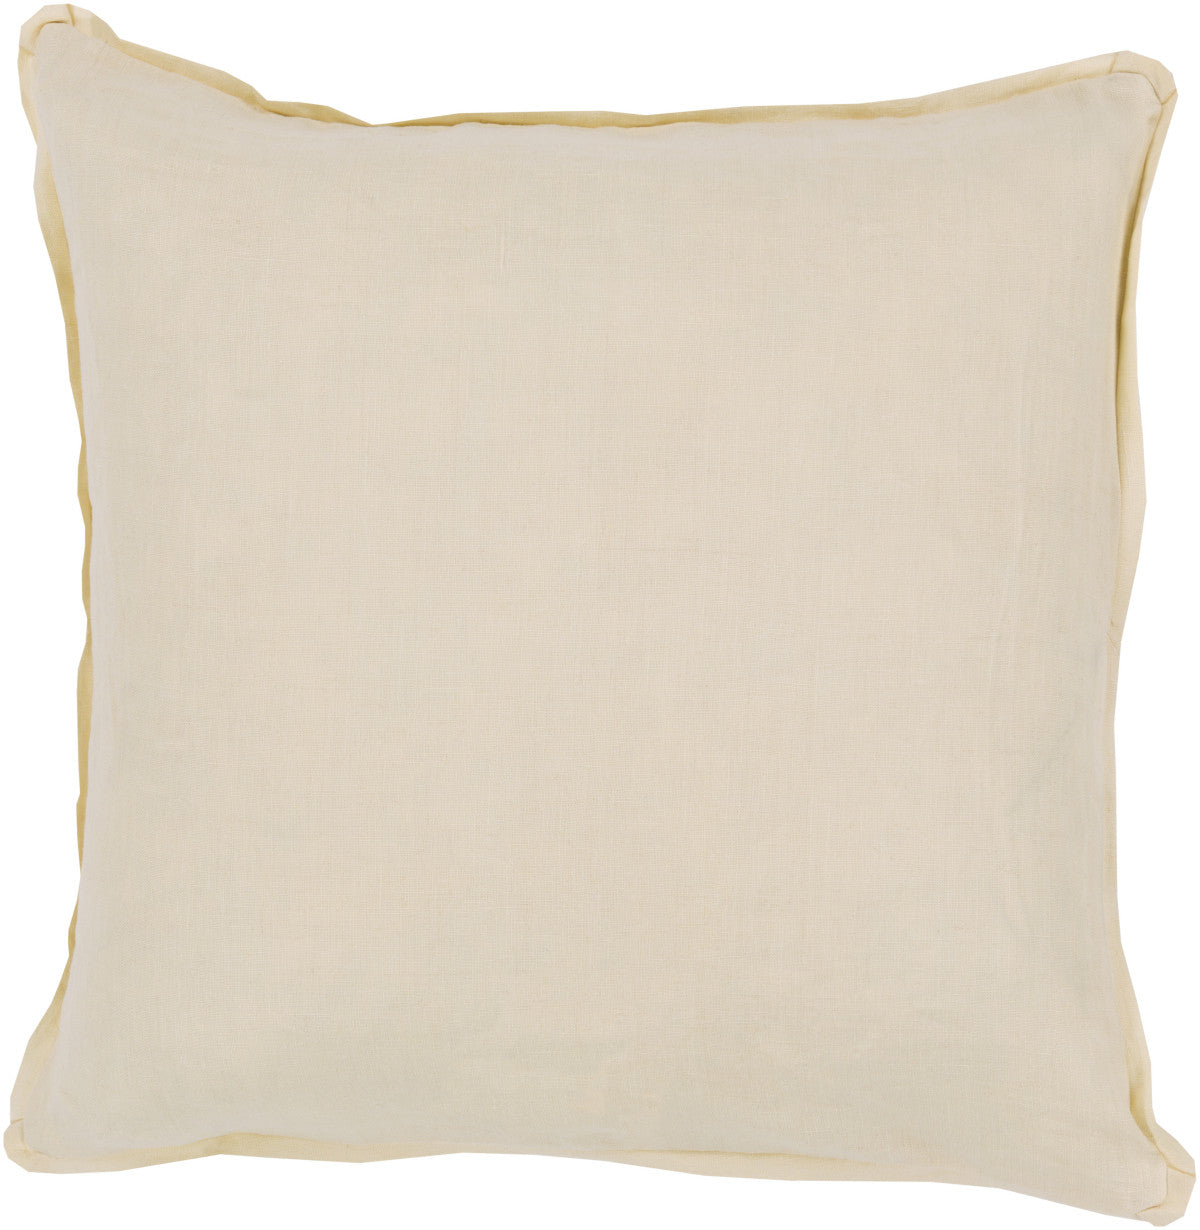 Surya Solid Luxury in Linen SL-005 Pillow main image